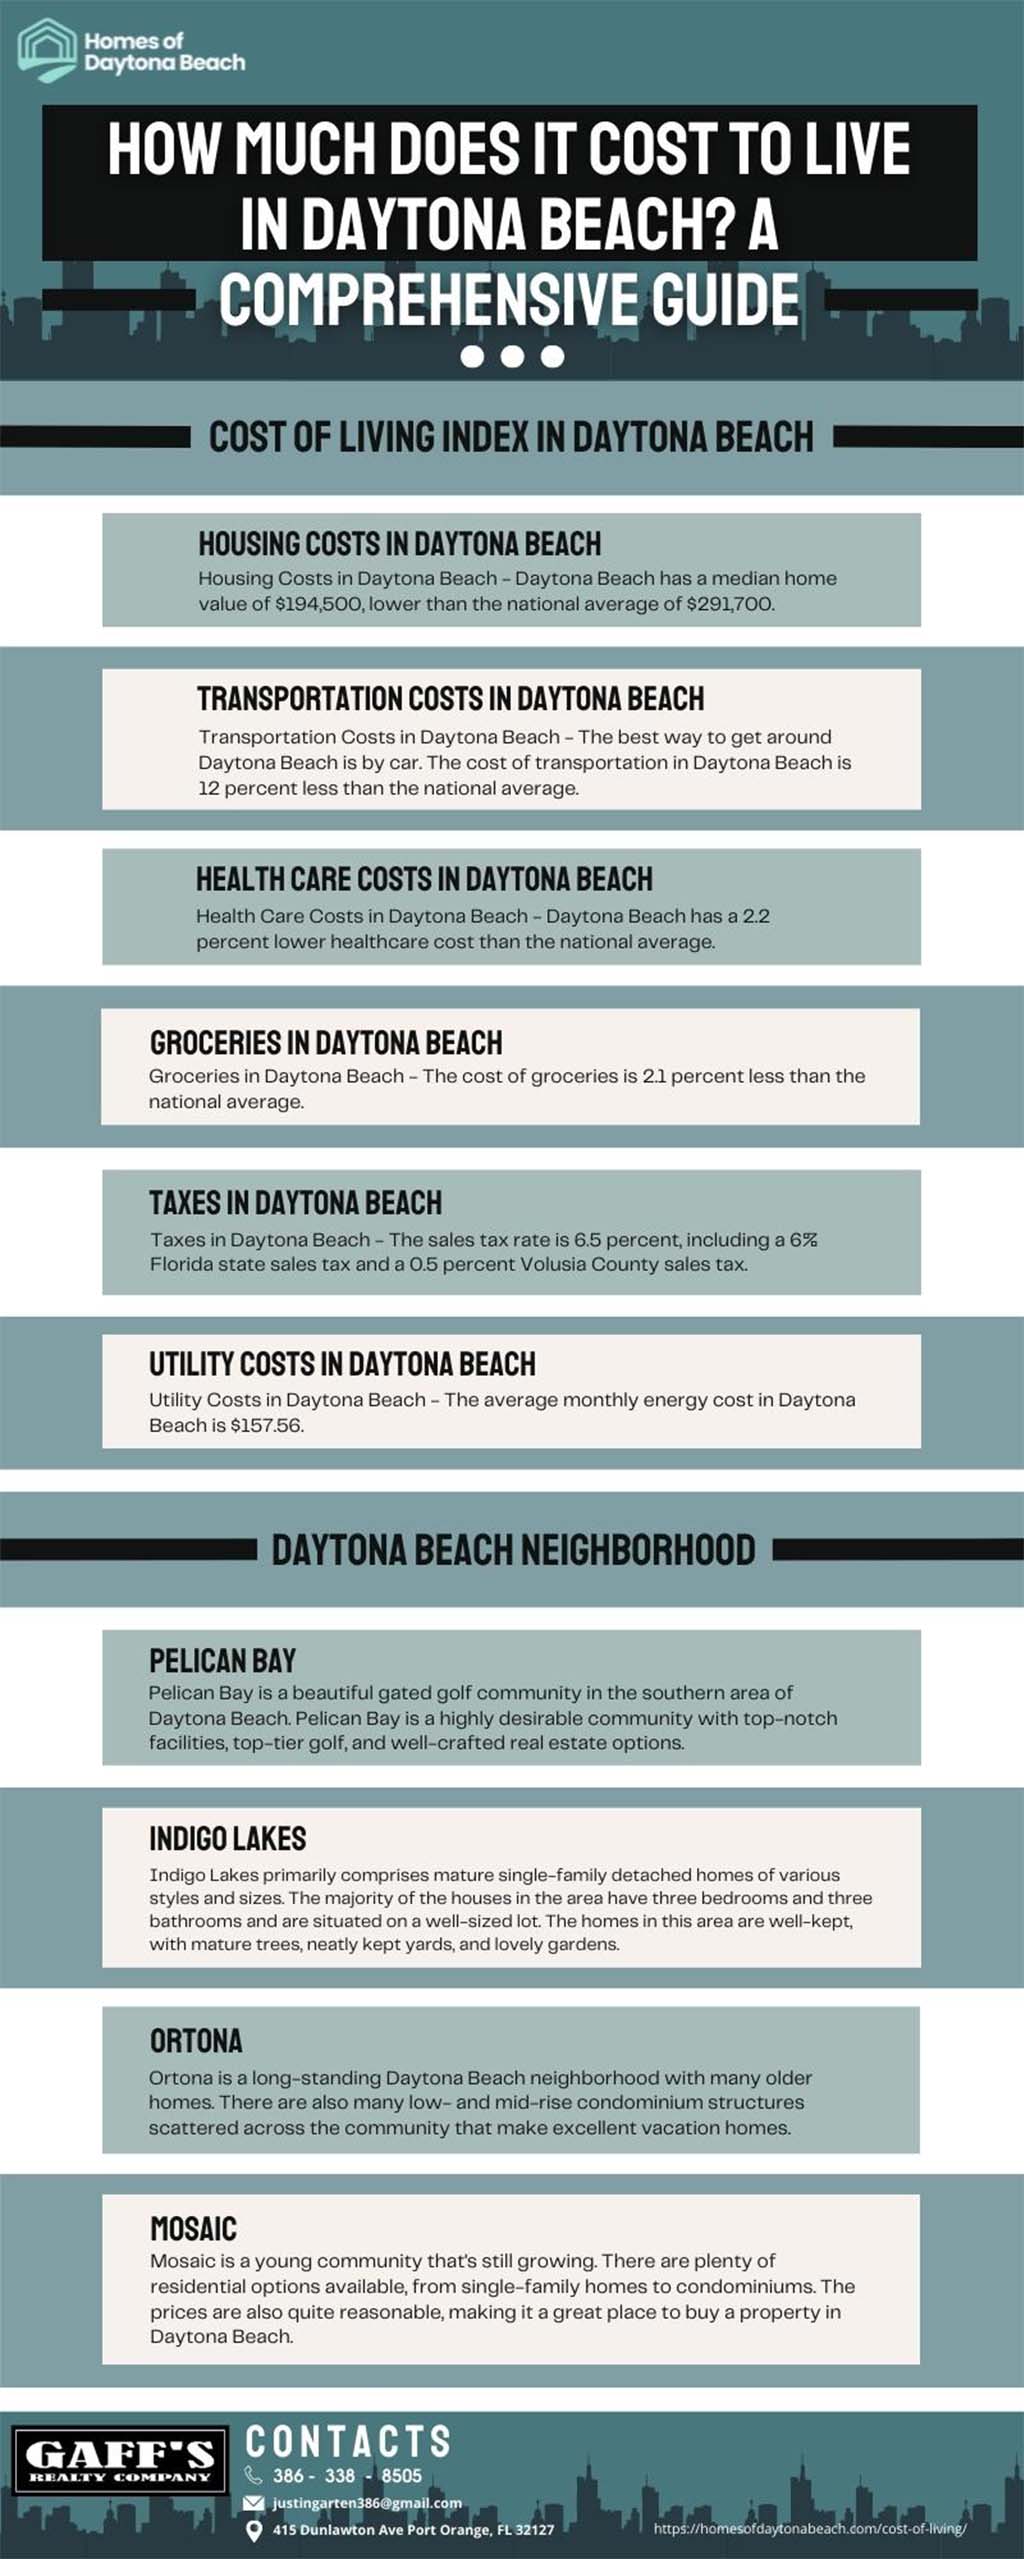 Cost to Live in Daytona Beach